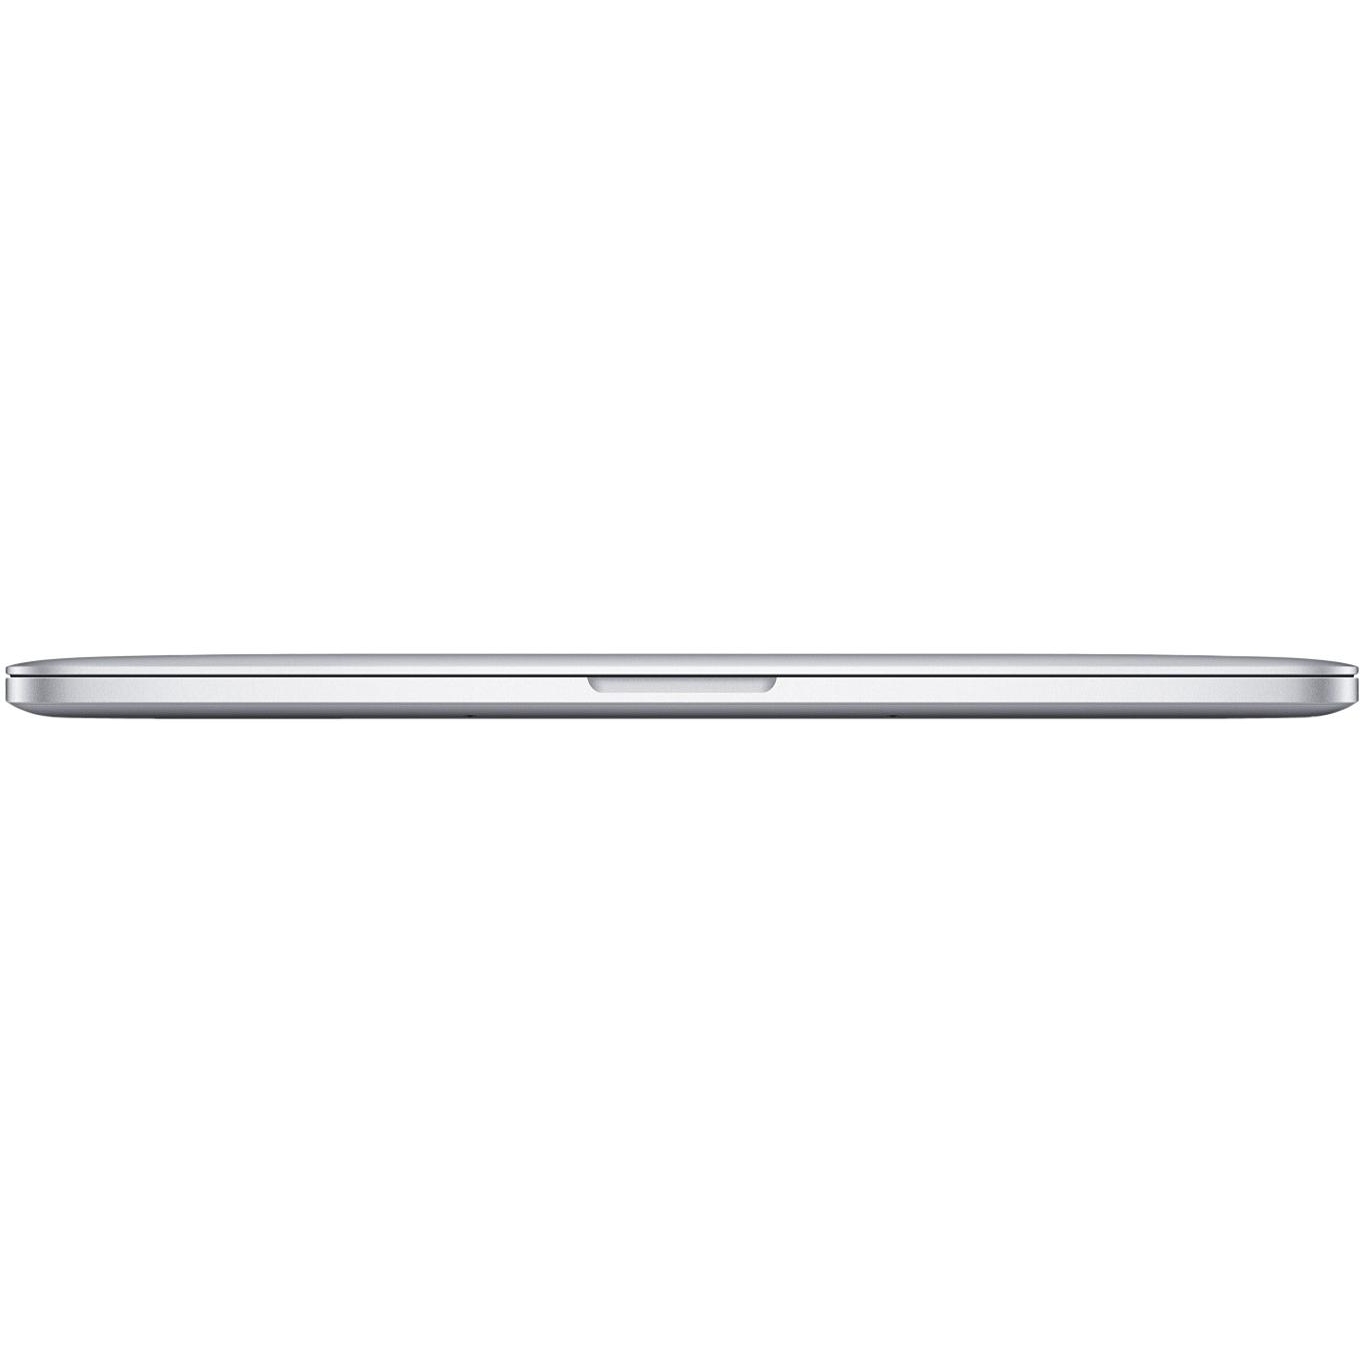 Apple Macbook Pro 13 Silver 2013 (ME864) б/у